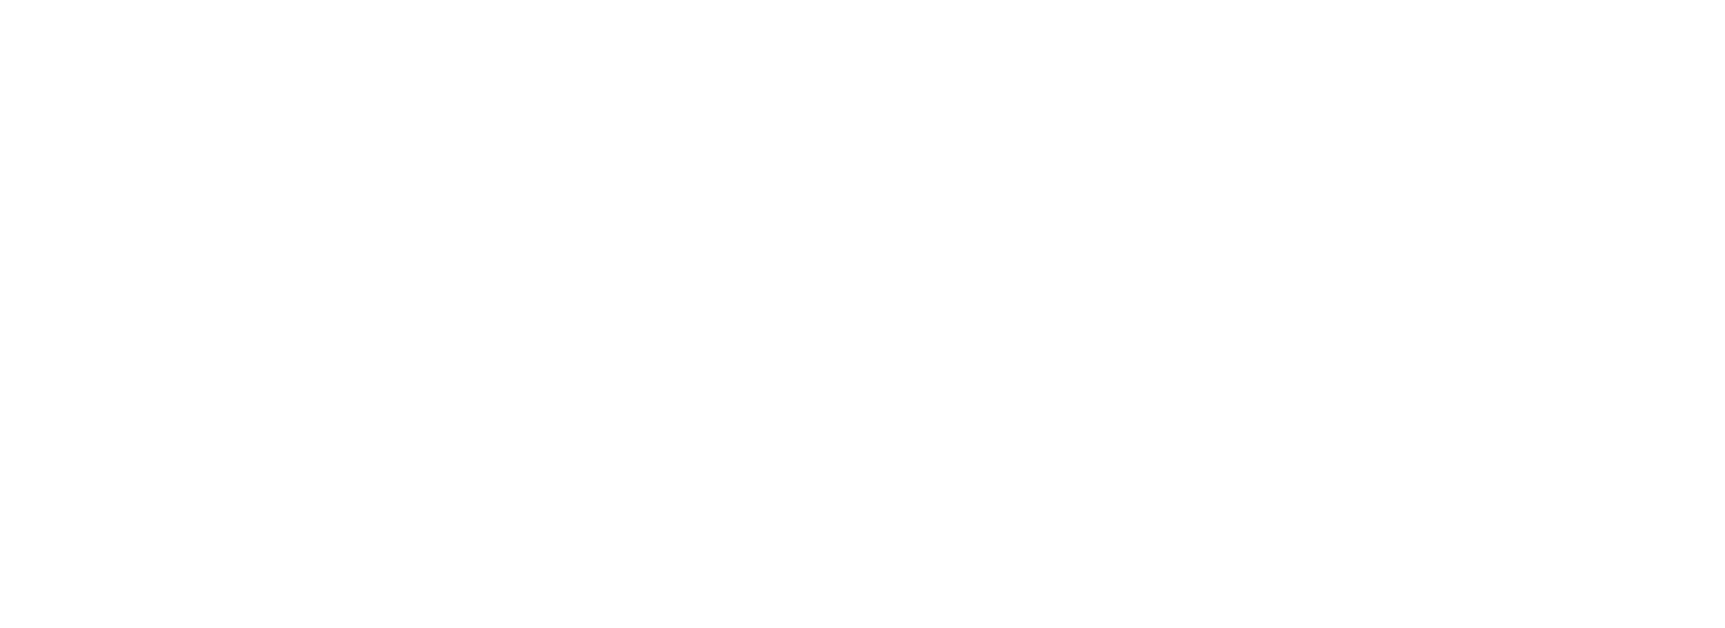 PhoenixMedia Digita